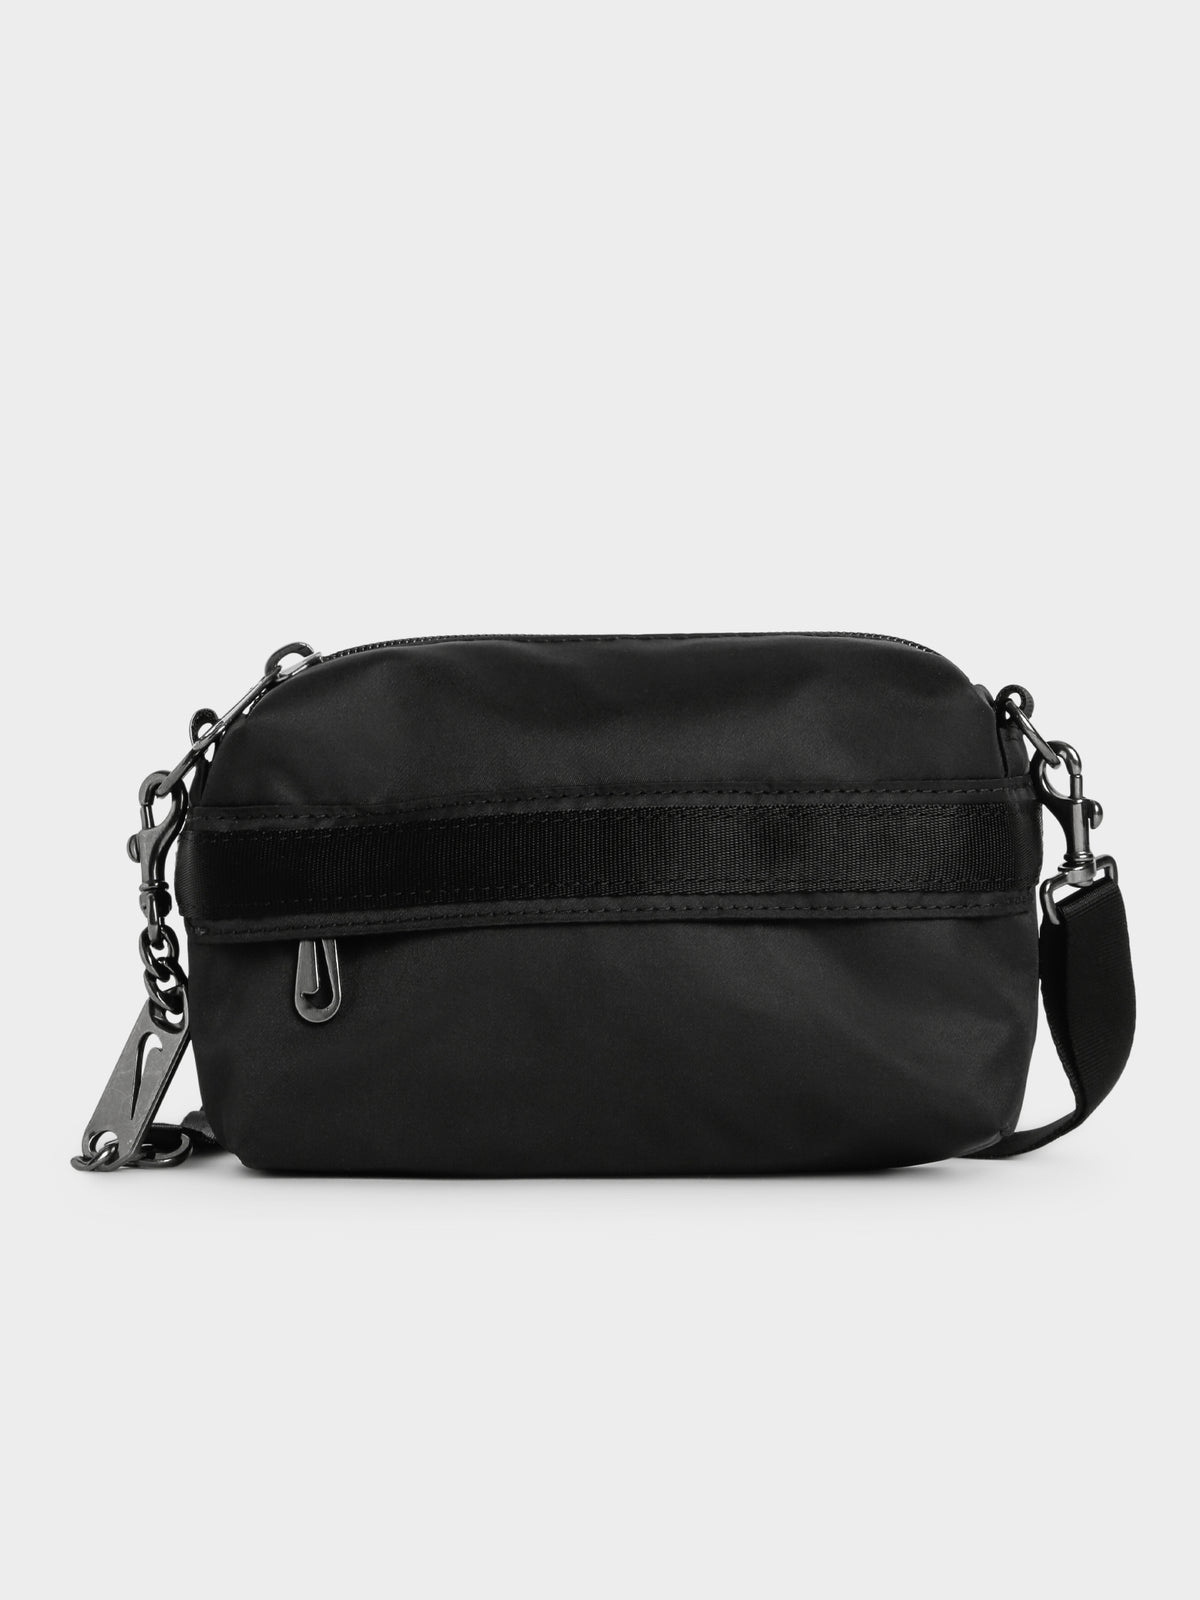 Futura Lux Cross Body Bag in Black